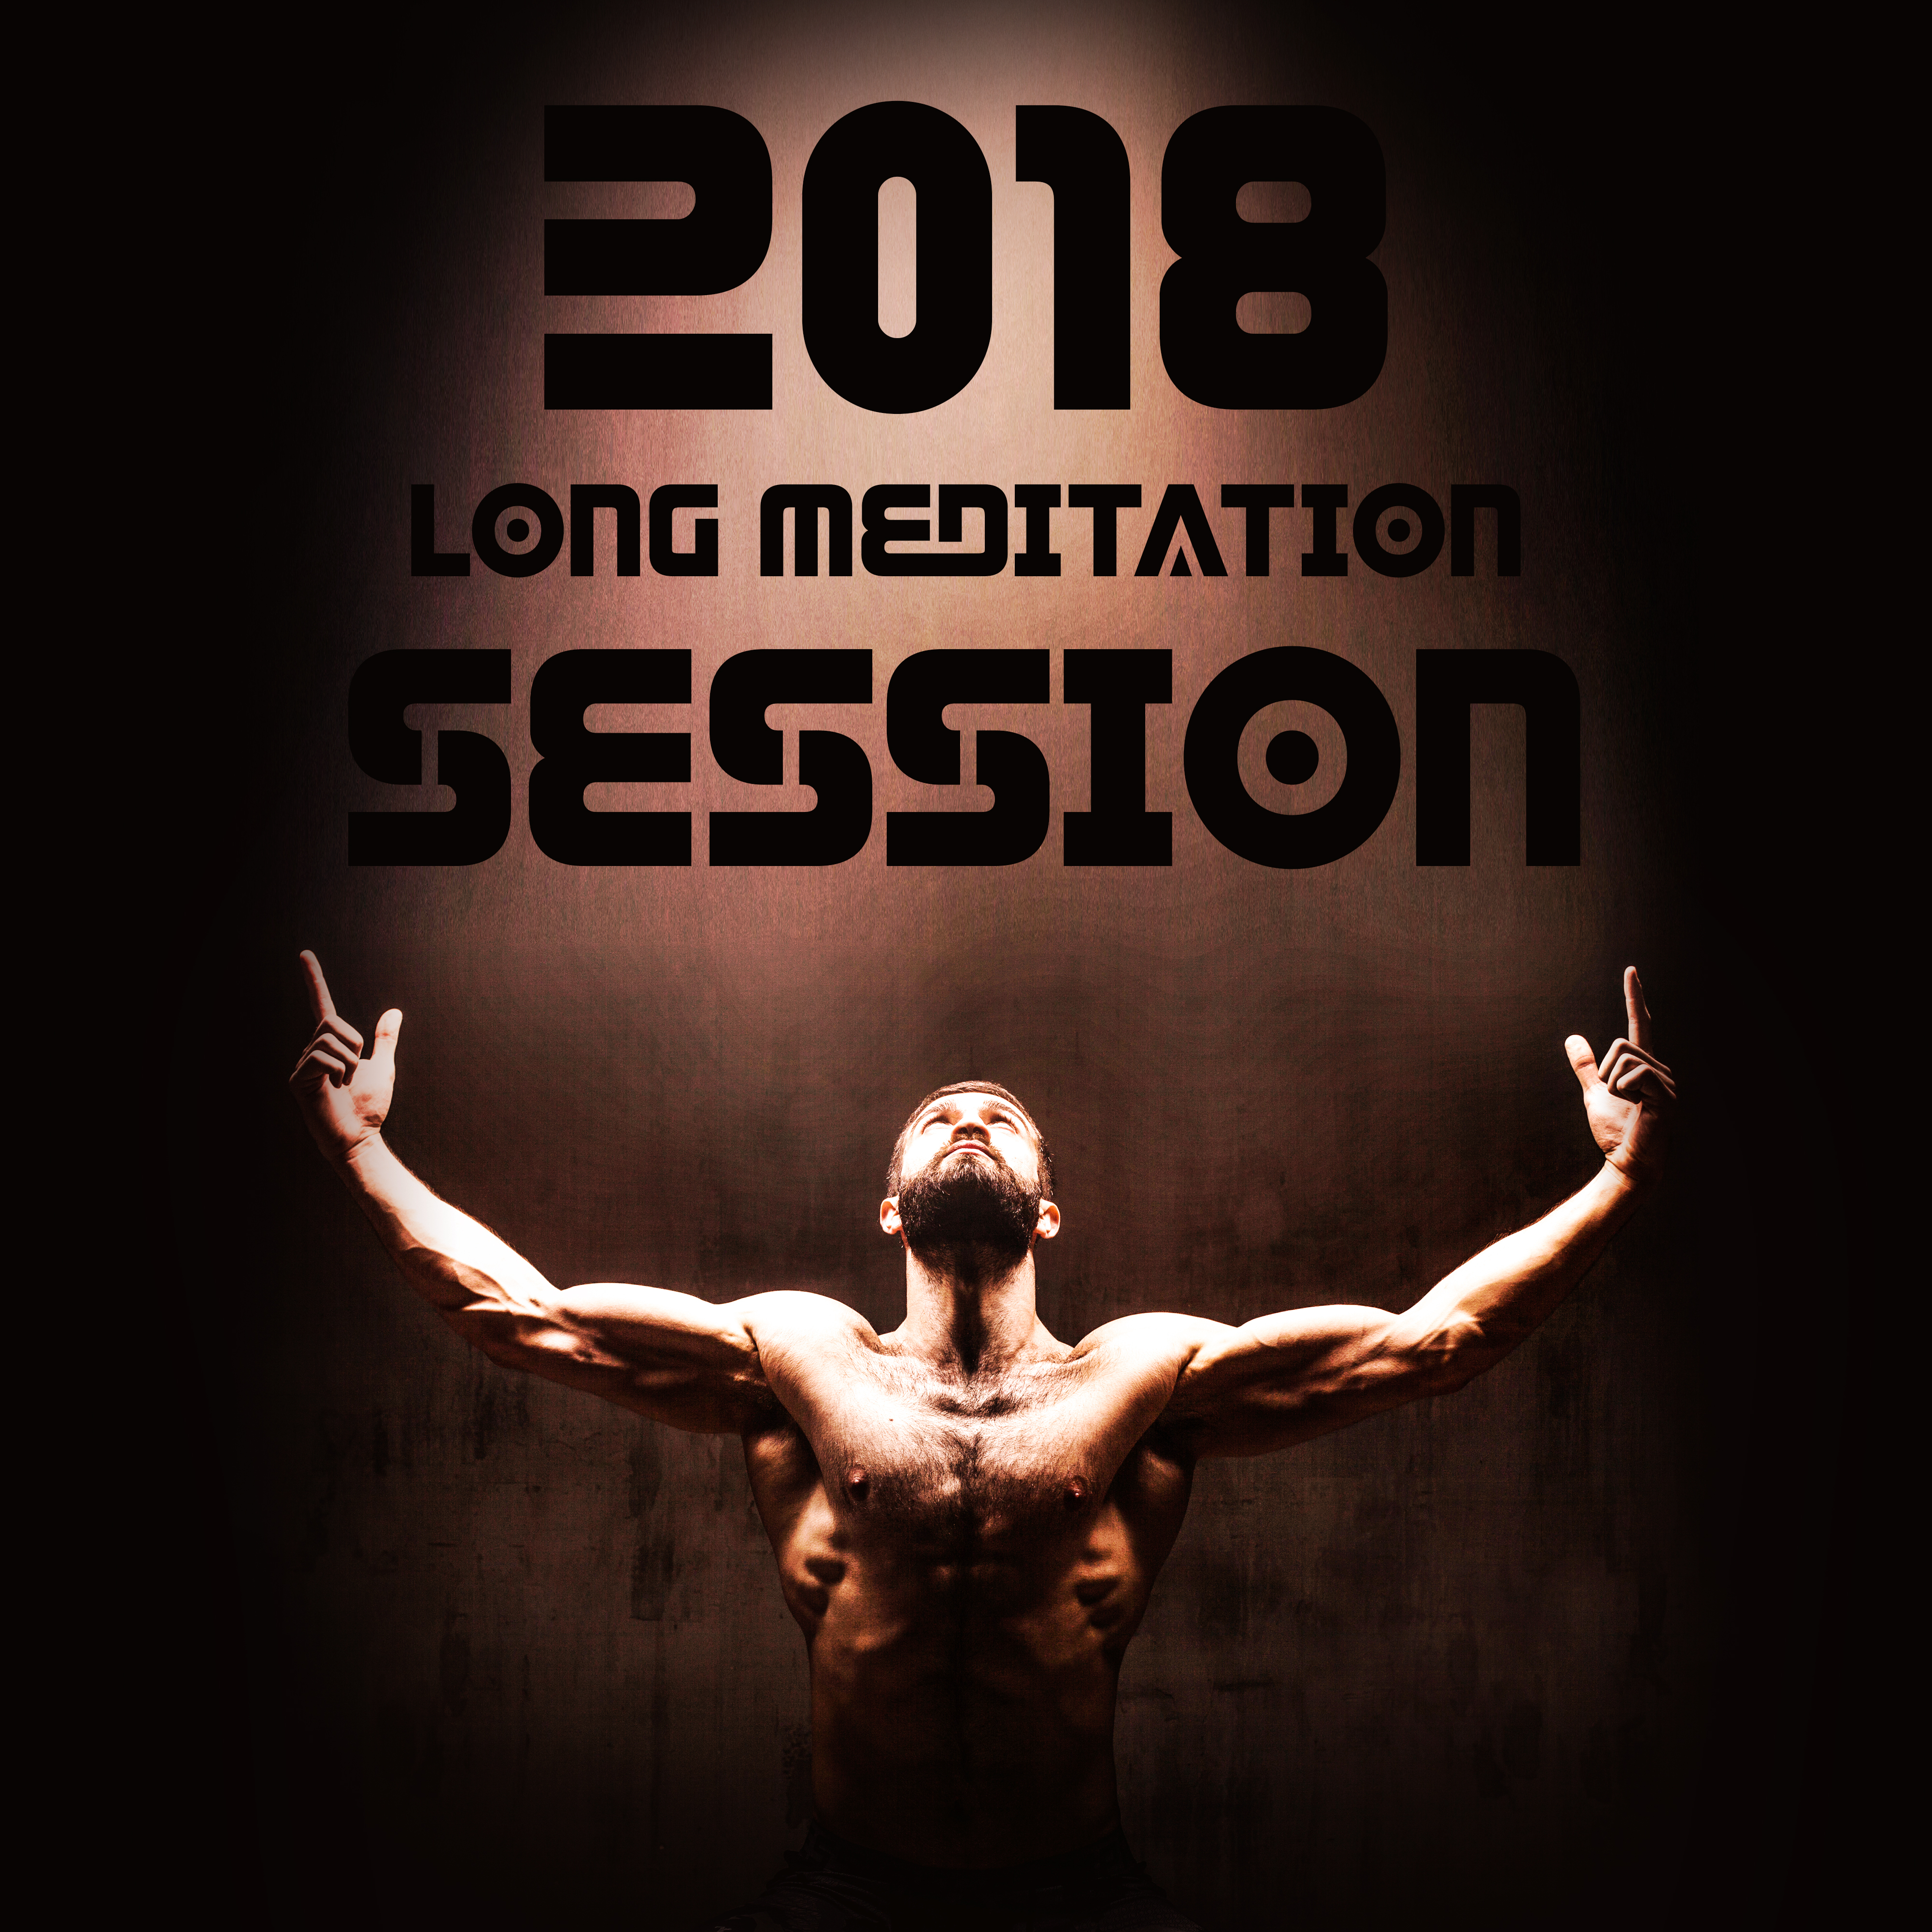 2018 Long Meditation Session